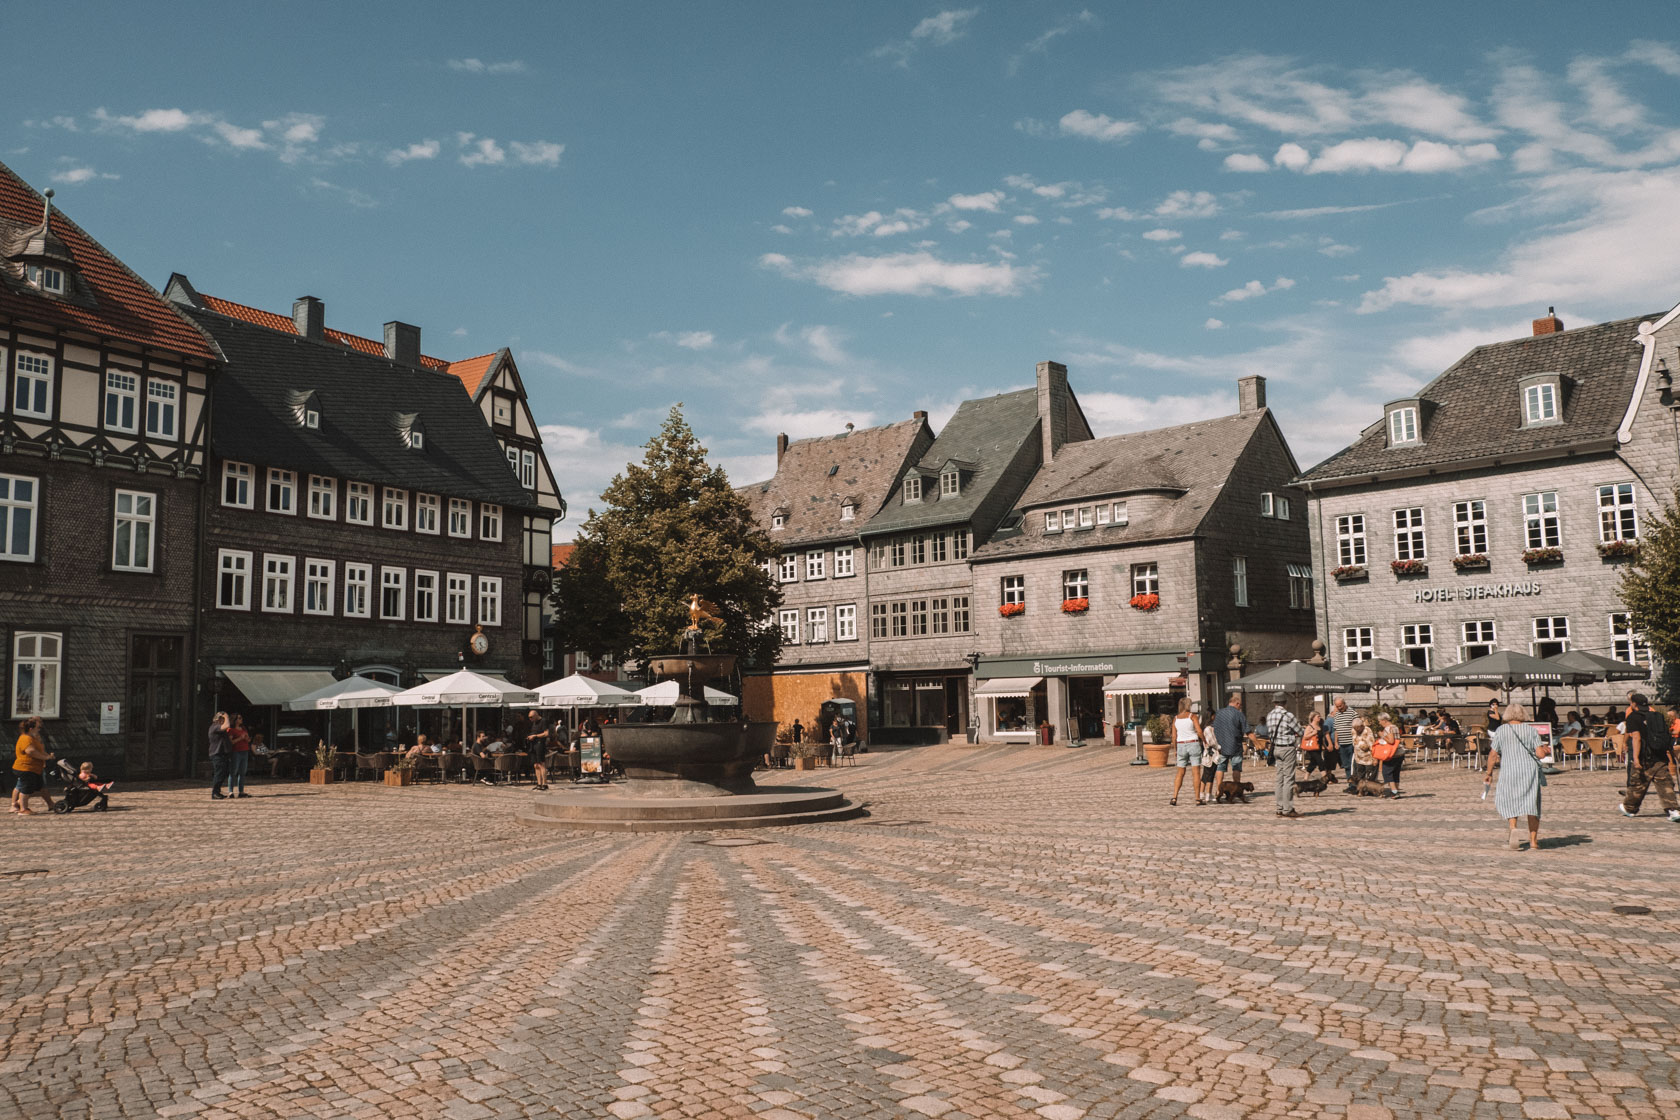 Goslar, Harz region